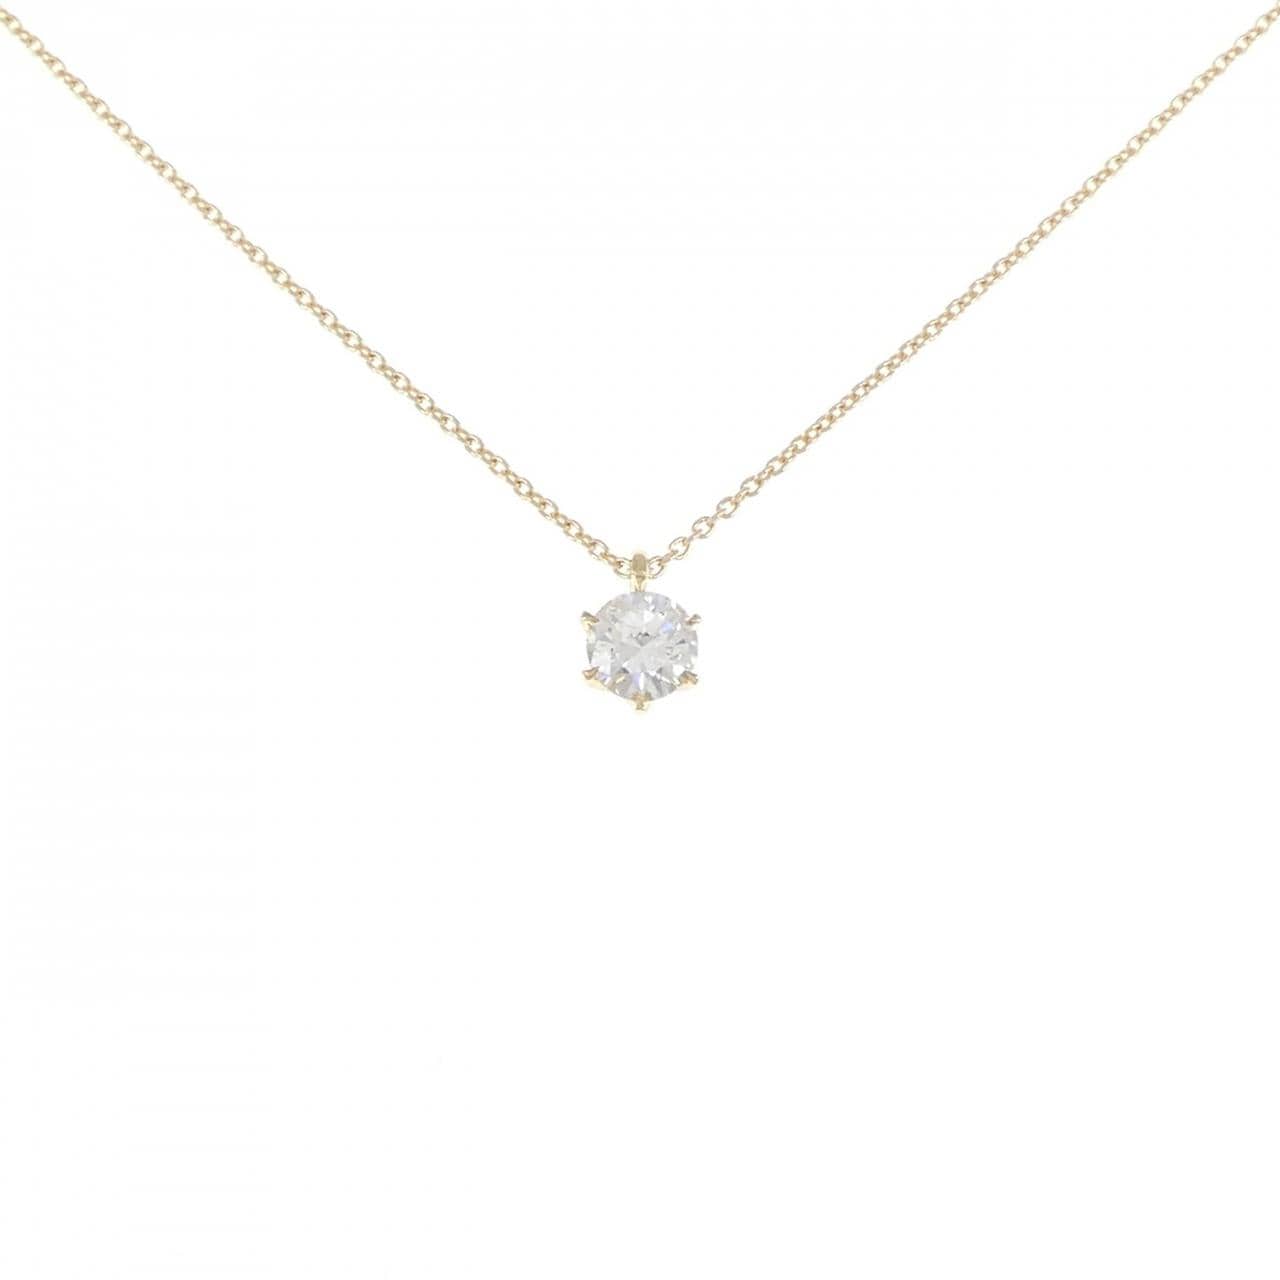 K18YG Diamond Necklace 0.393CT H I1 Good